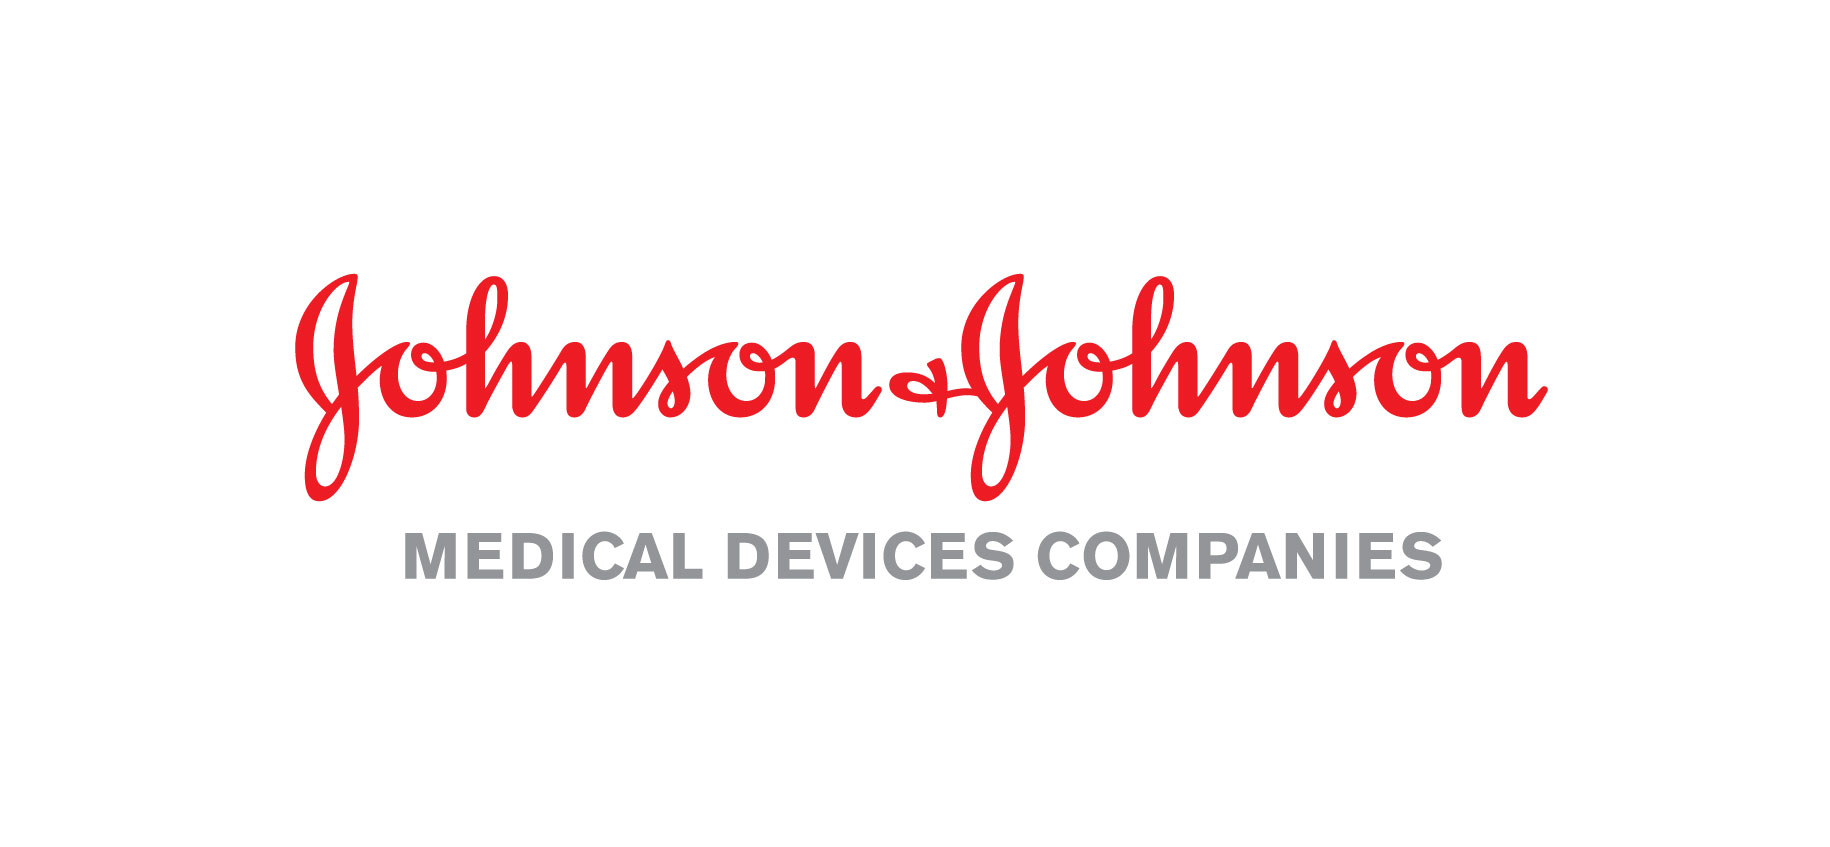 jnj_Medical_Devices_Companies_logo